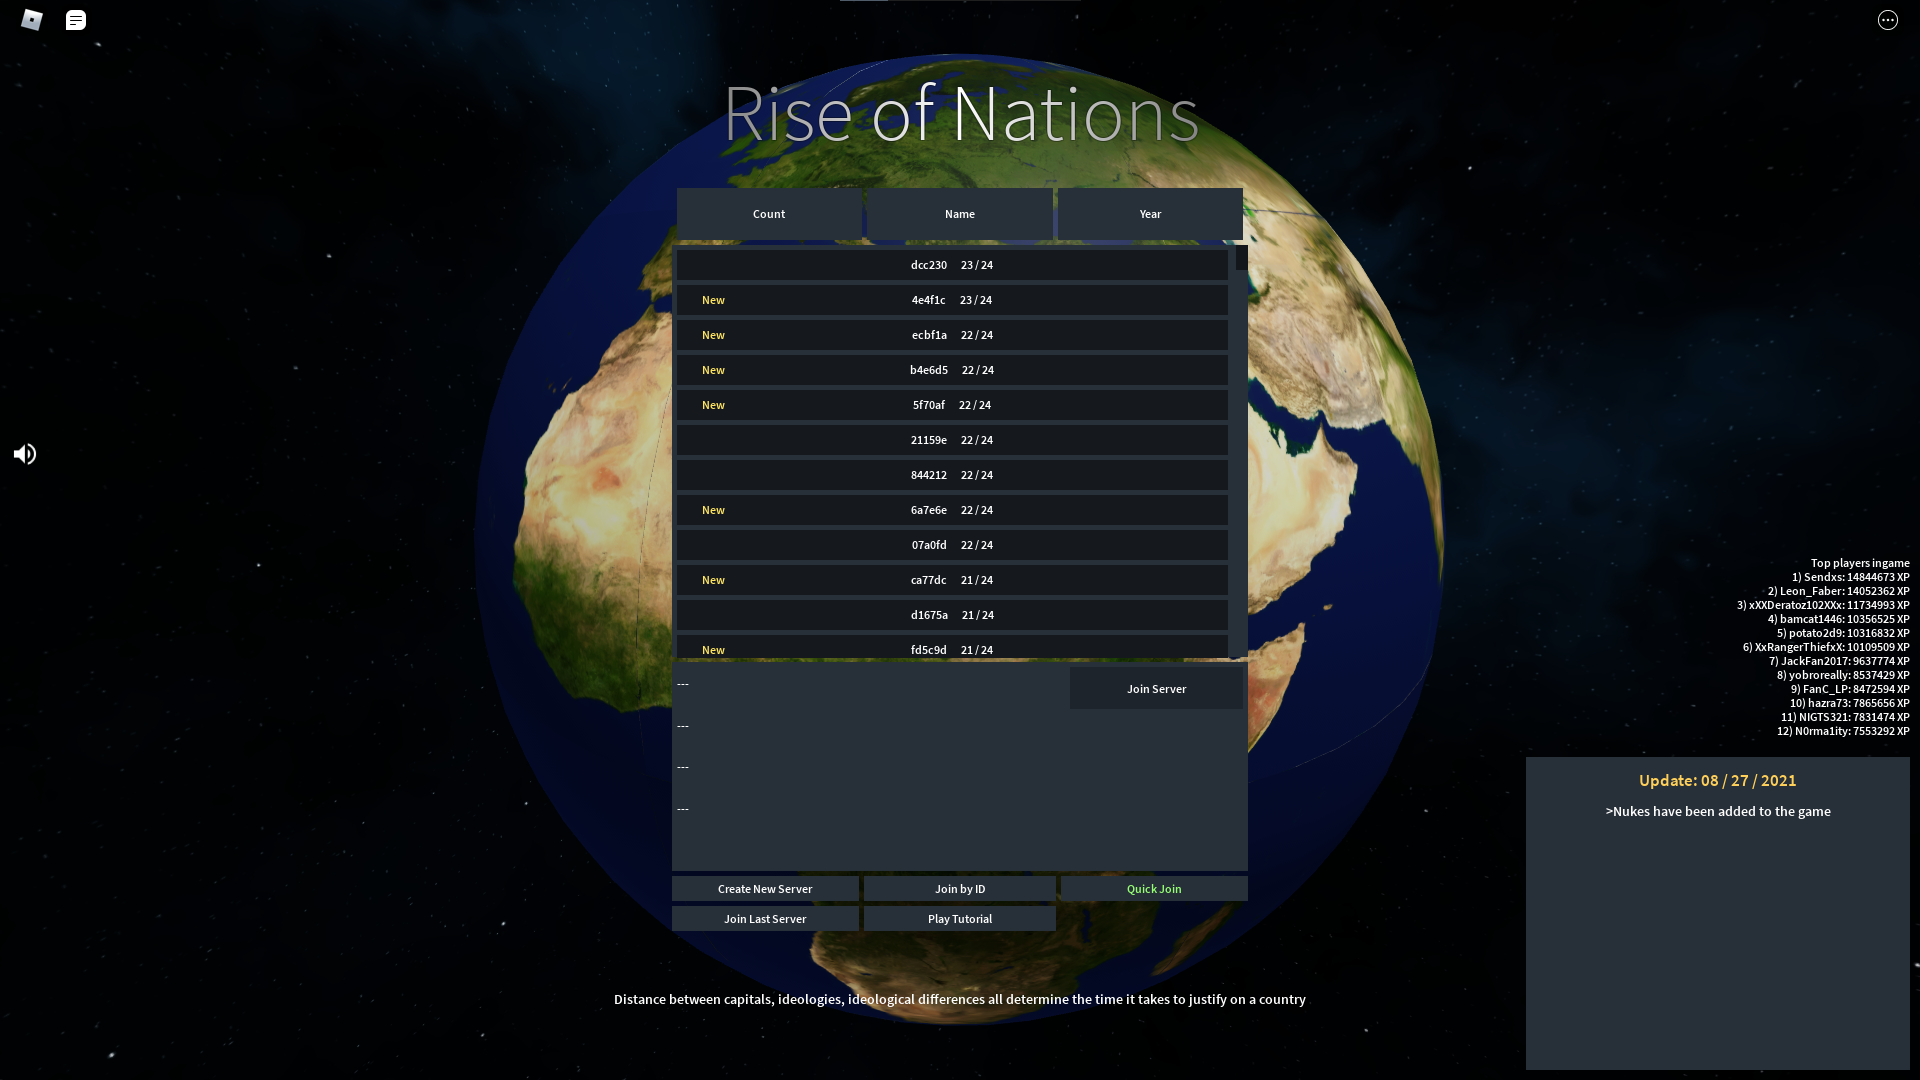 Roblox:Rise of Nations got hacked [Part 1/Sneak-Peek] 